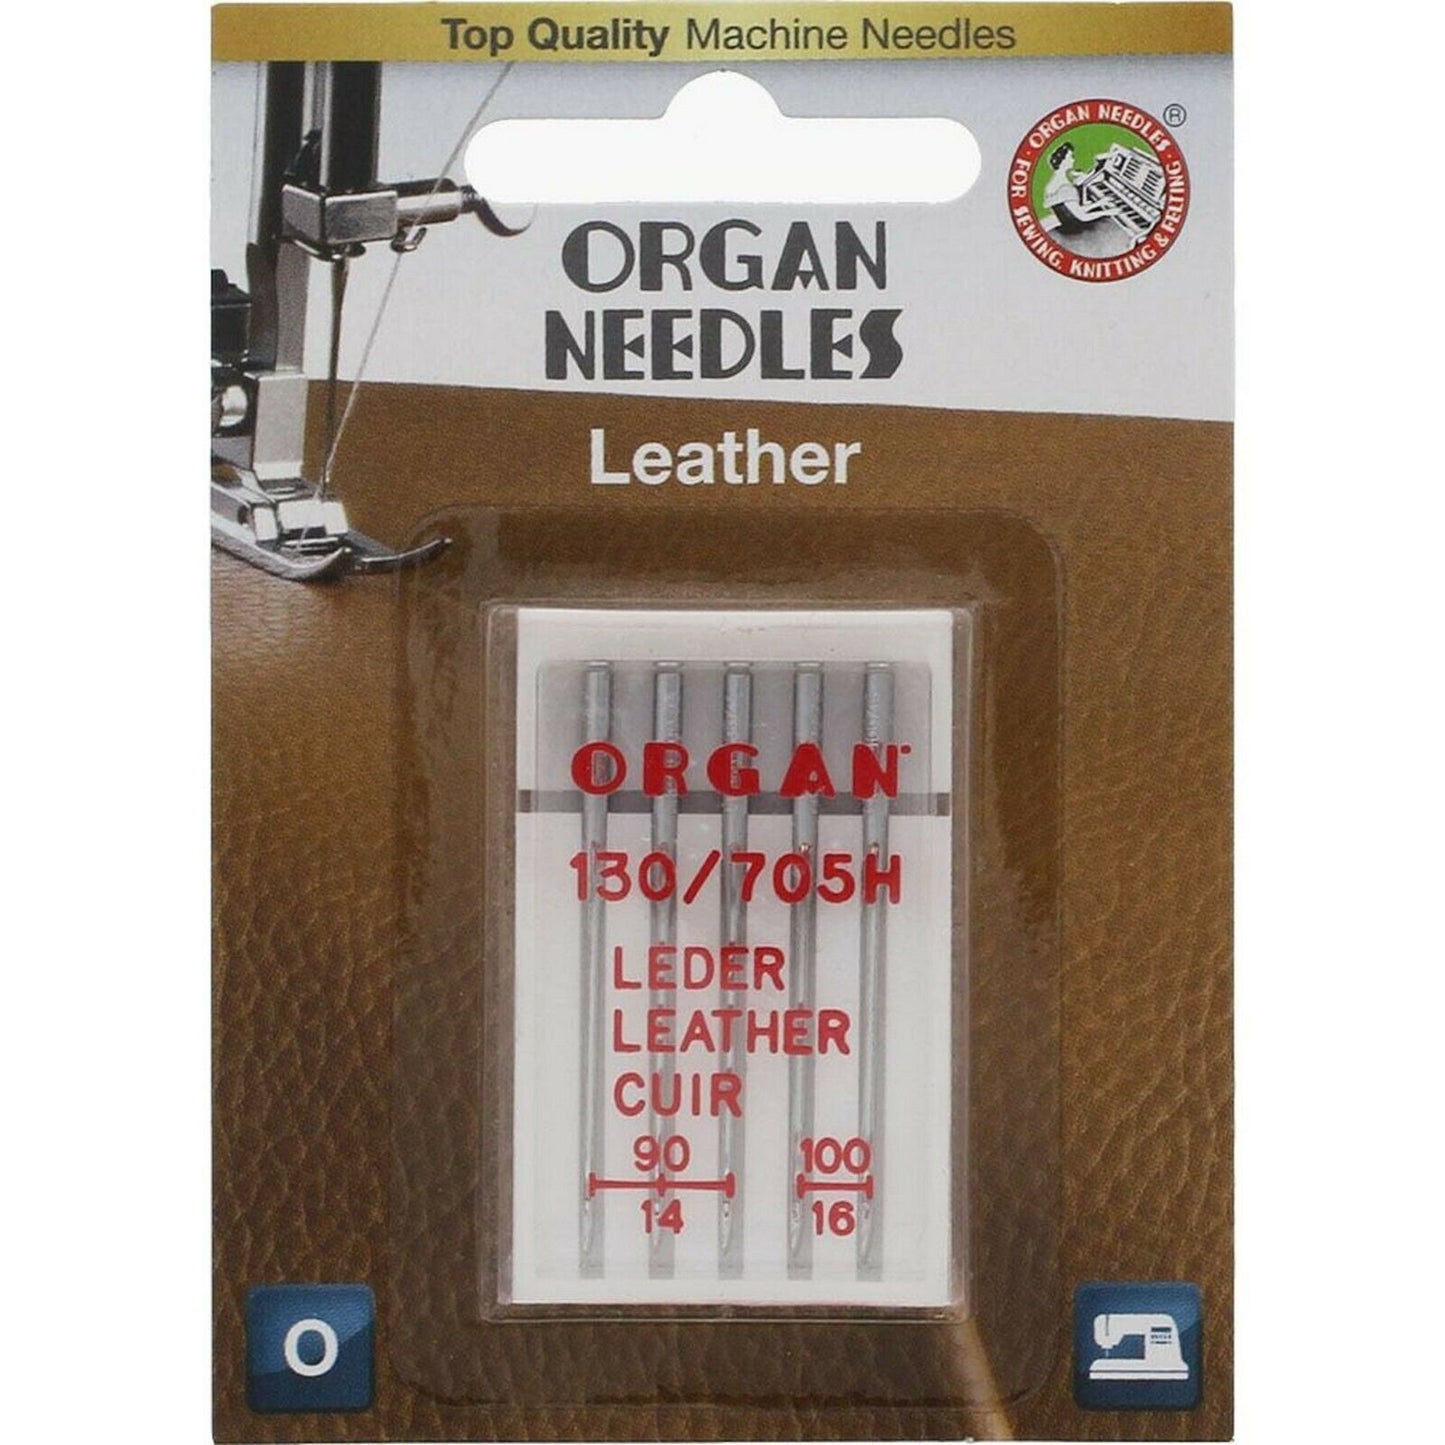 Organ Sewing Machine Needles "Leather"-5 Needles